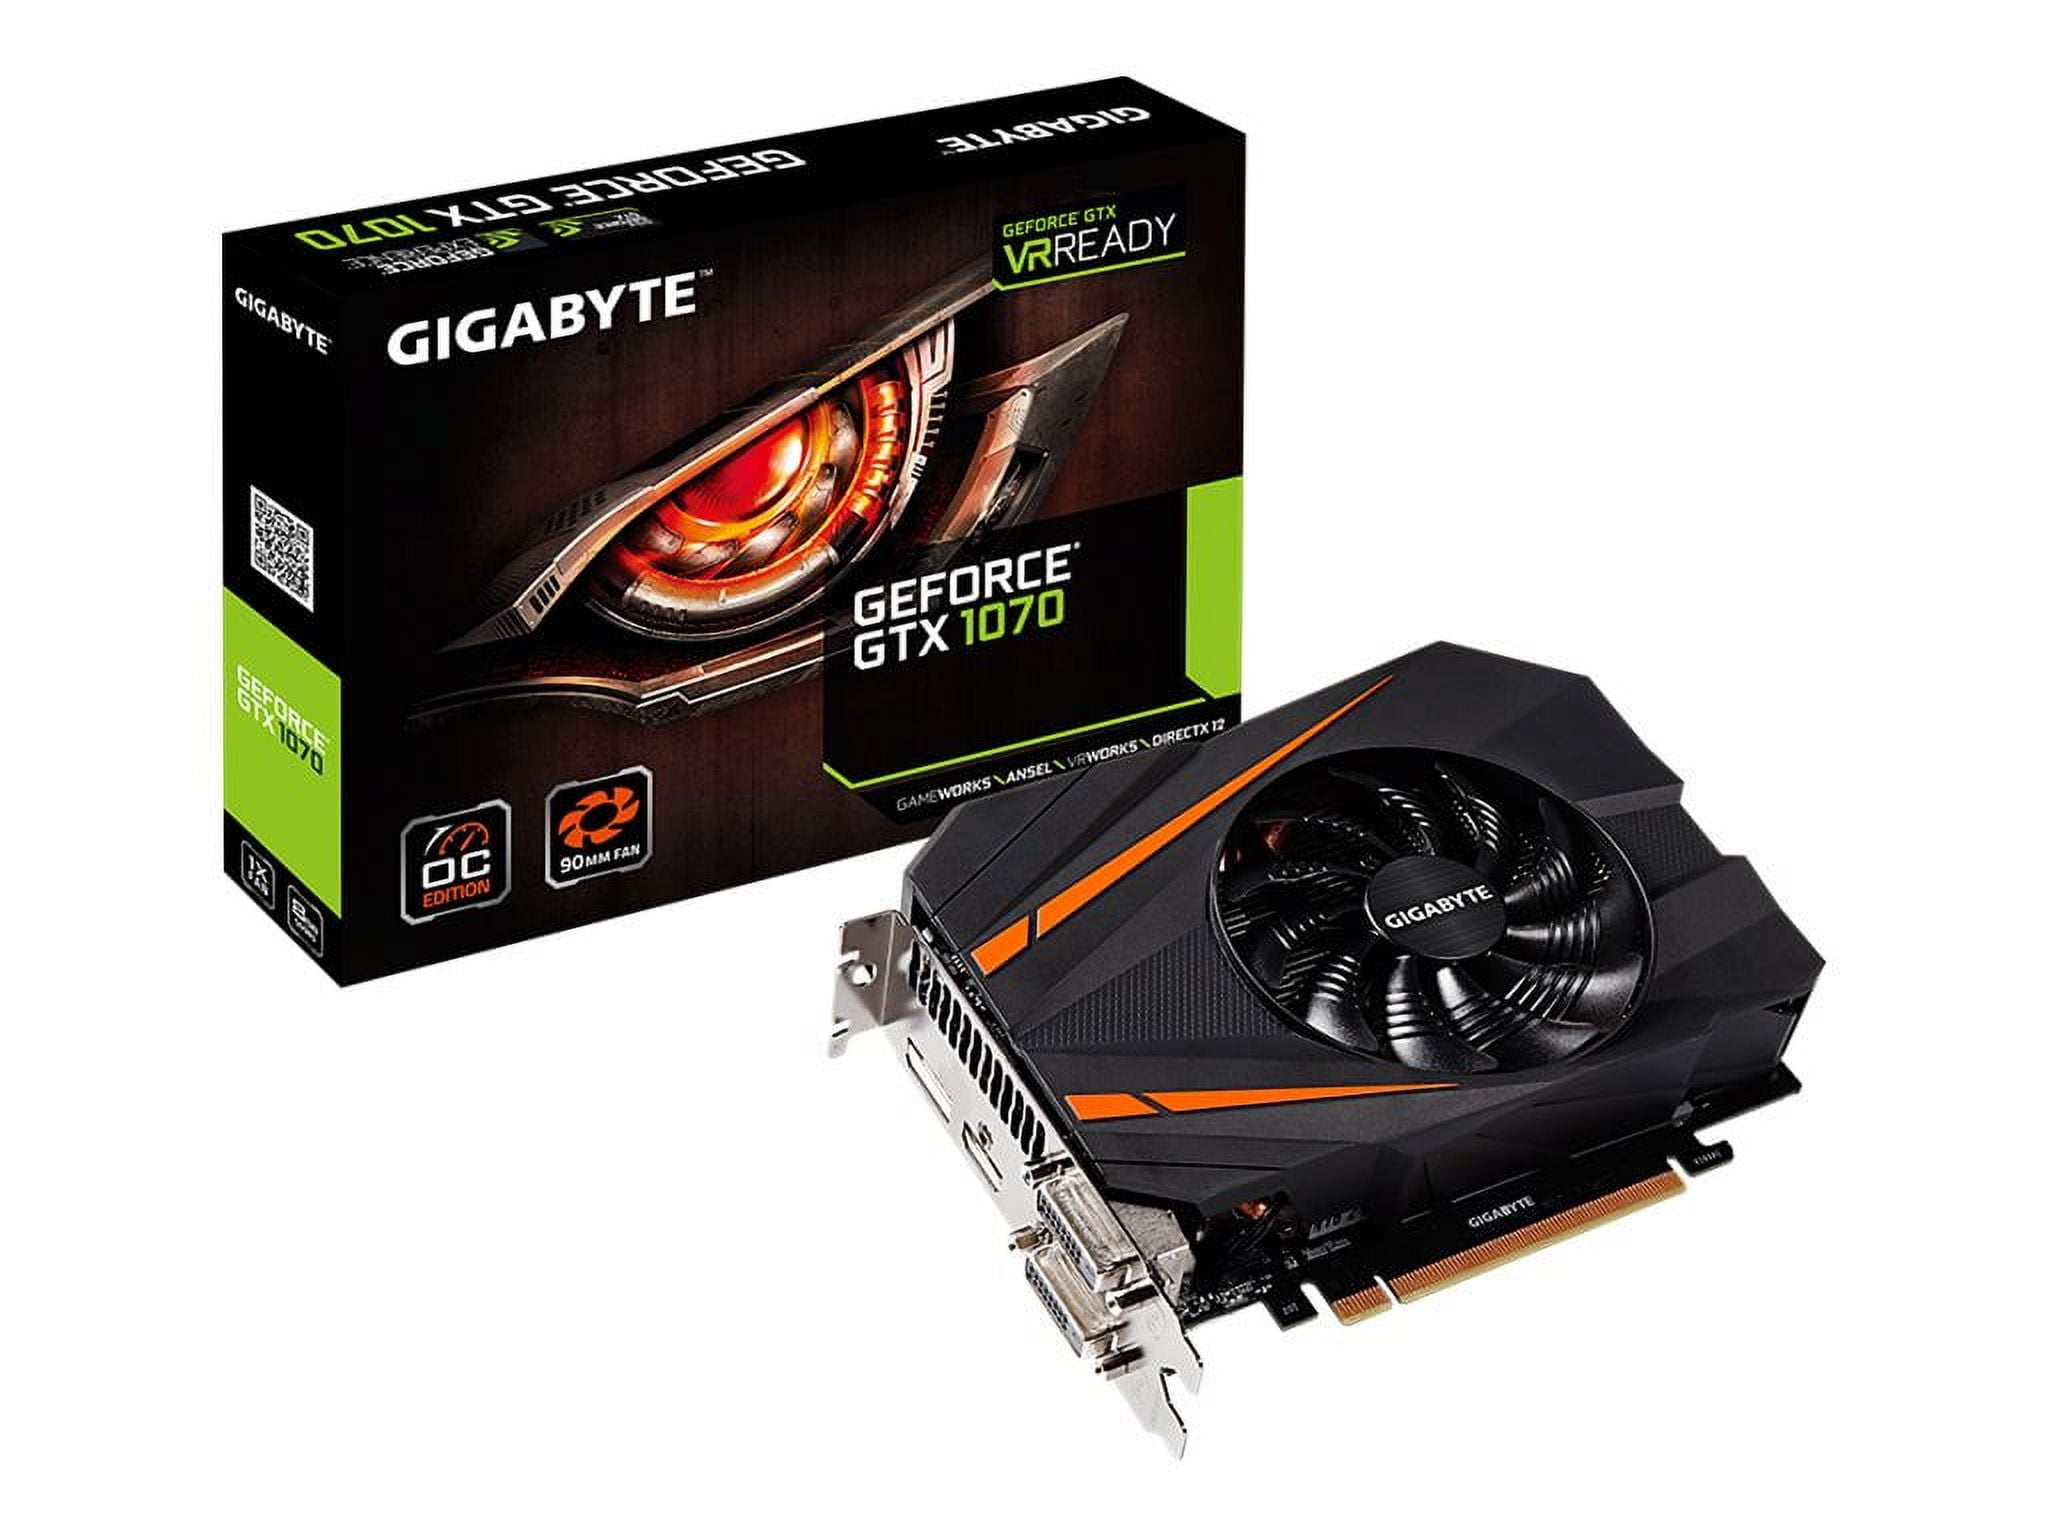 GIGABYTE GeForce GTX 1070 8GB GDDR5 PCI-E x16 Graphics Card - Walmart.com